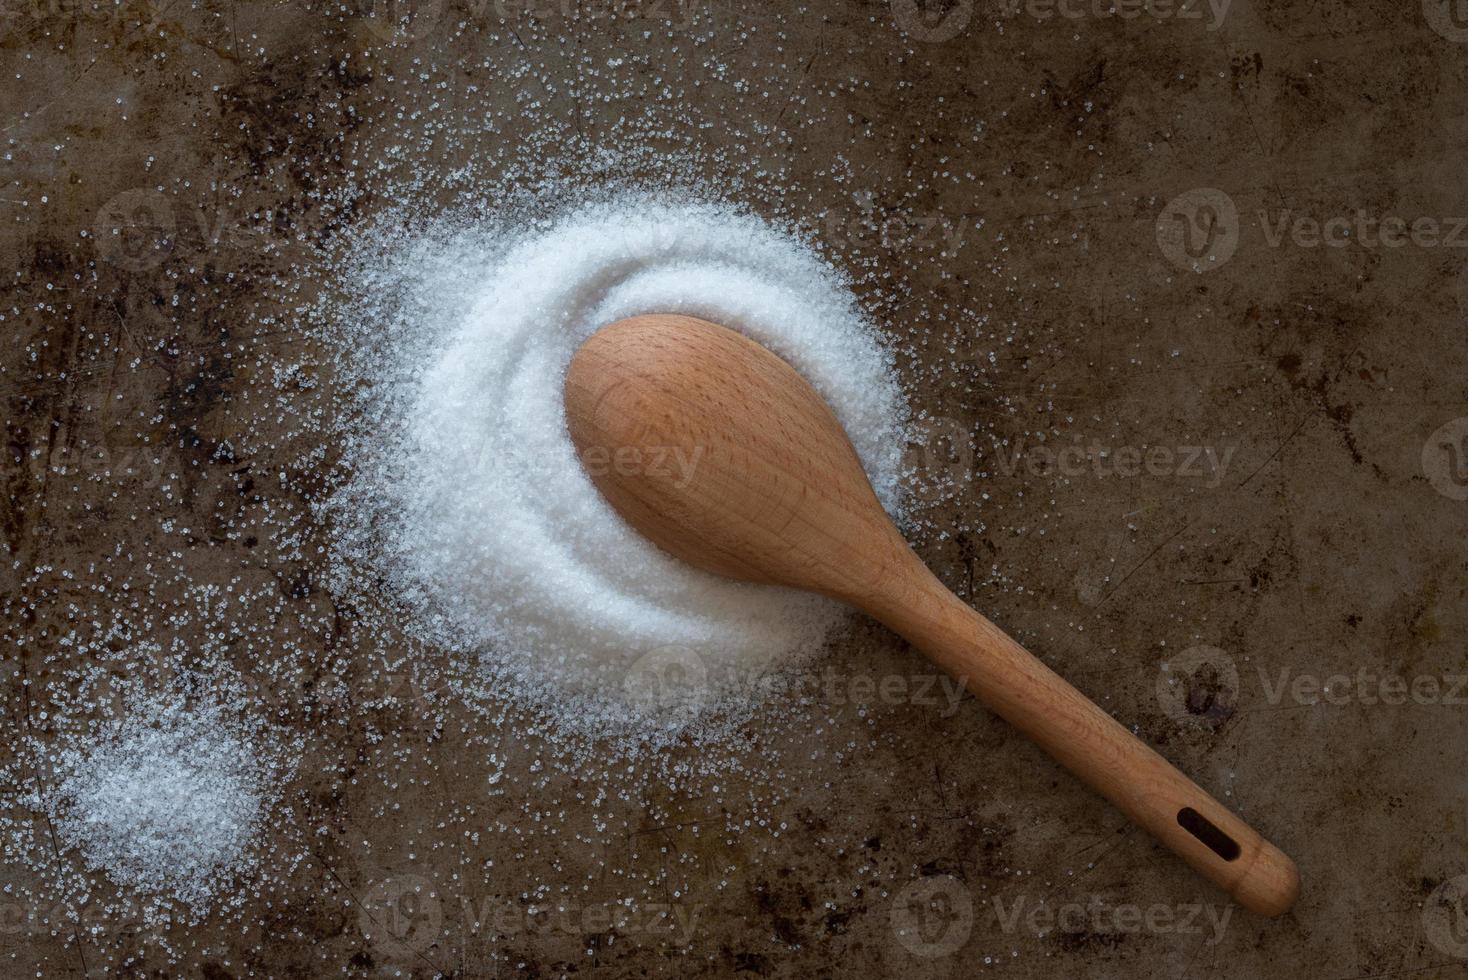 Iodized Table Salt Spilled from a Teaspoon photo